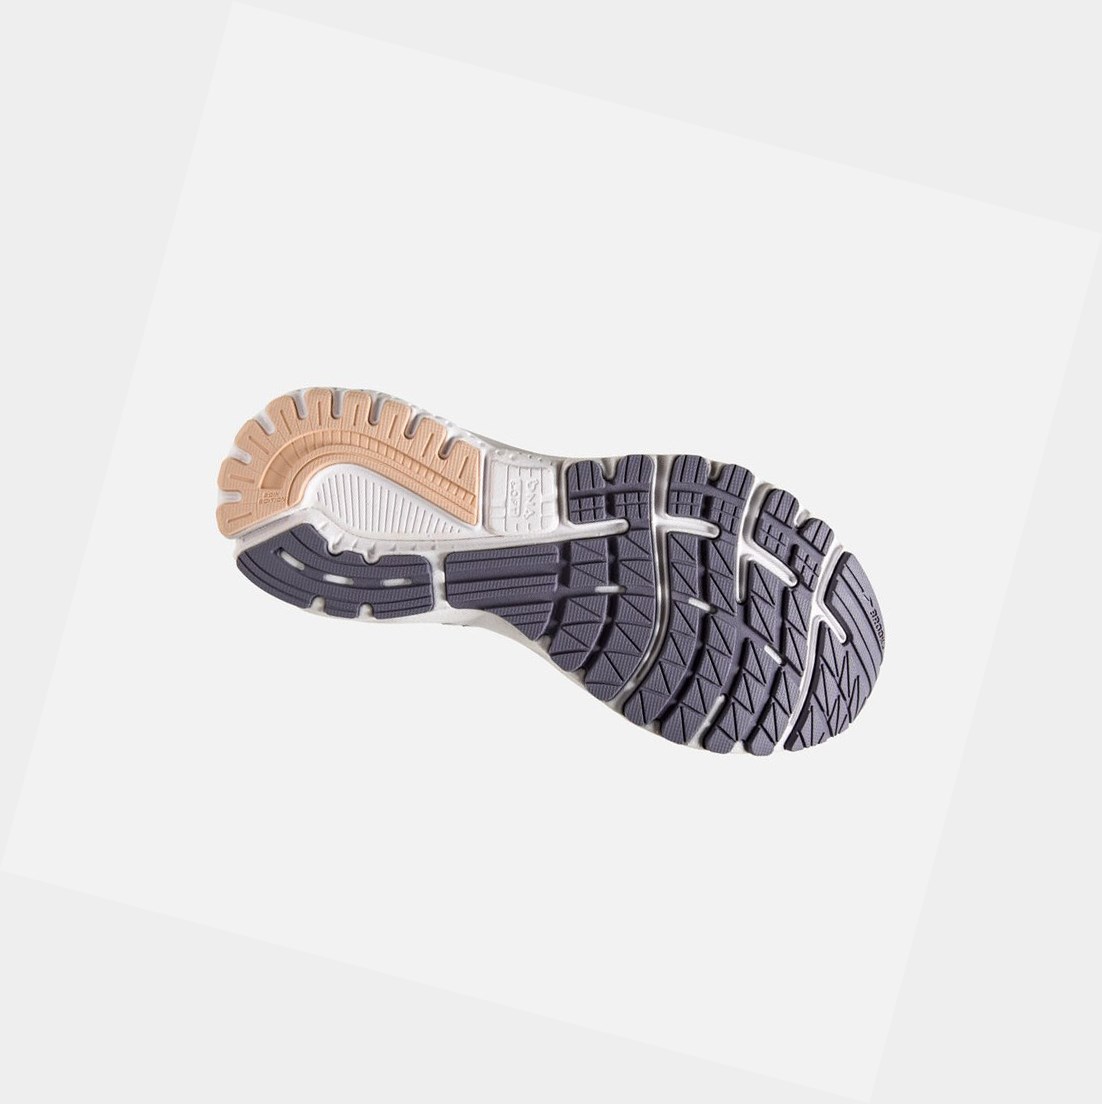 Brooks Adrenaline GTS 20 Women's Road Running Shoes Grey / Pale Peach / White | IDNC-14067